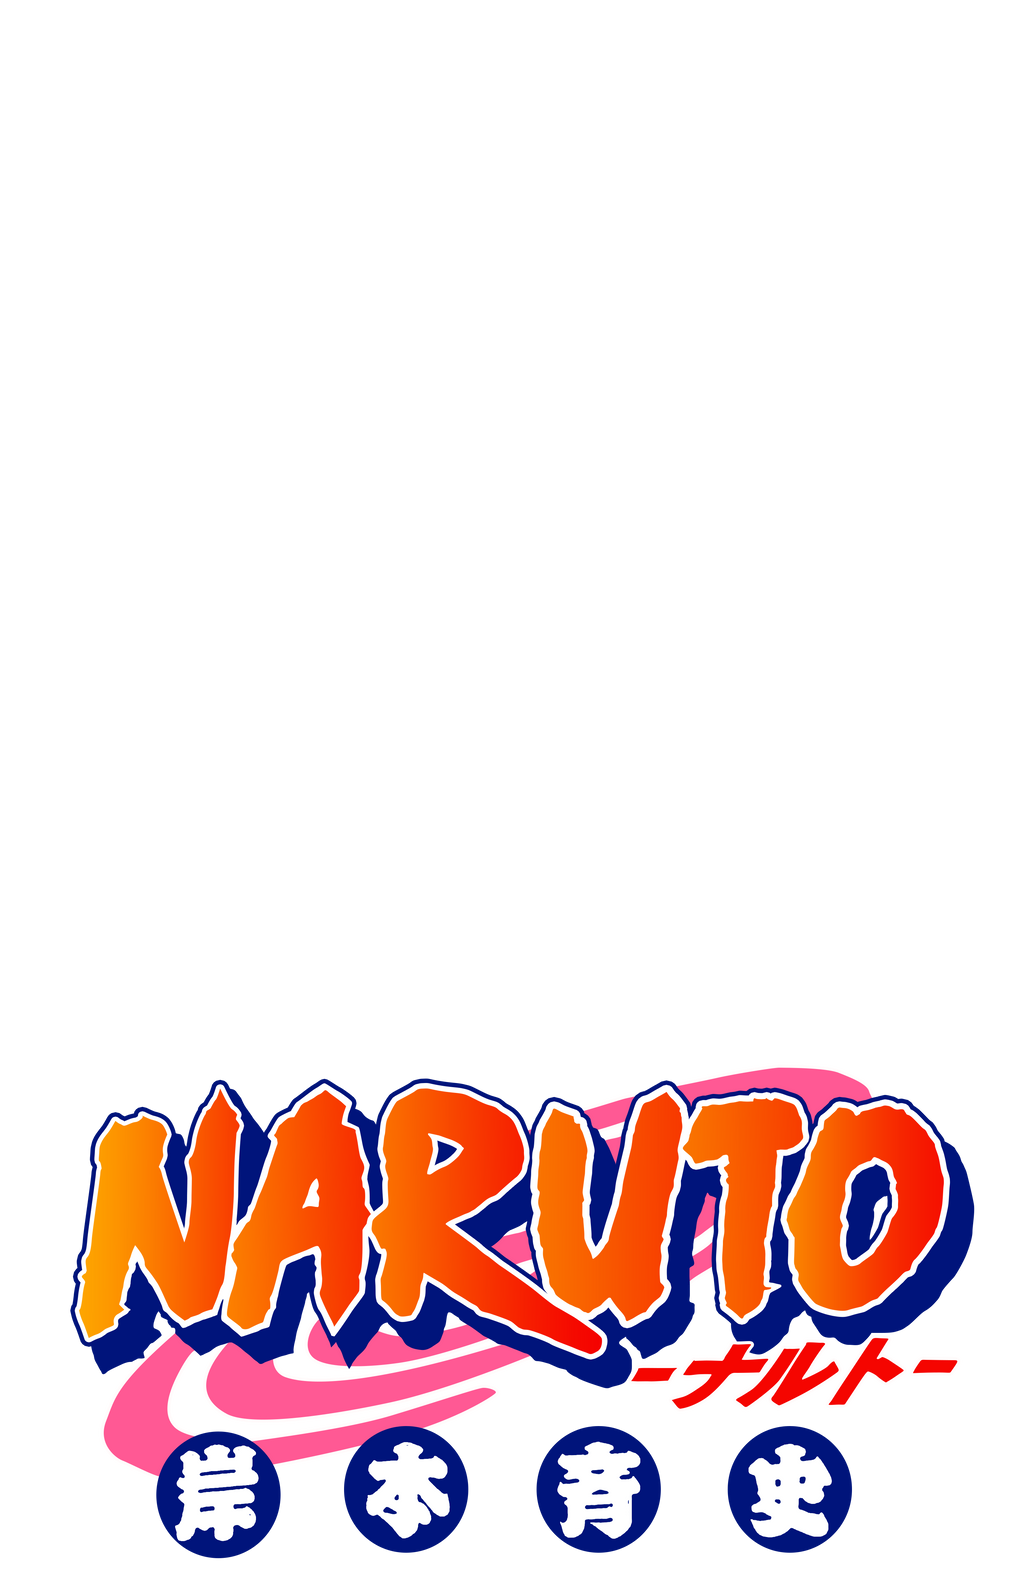 Naruto Logo by bangalybashir on DeviantArt